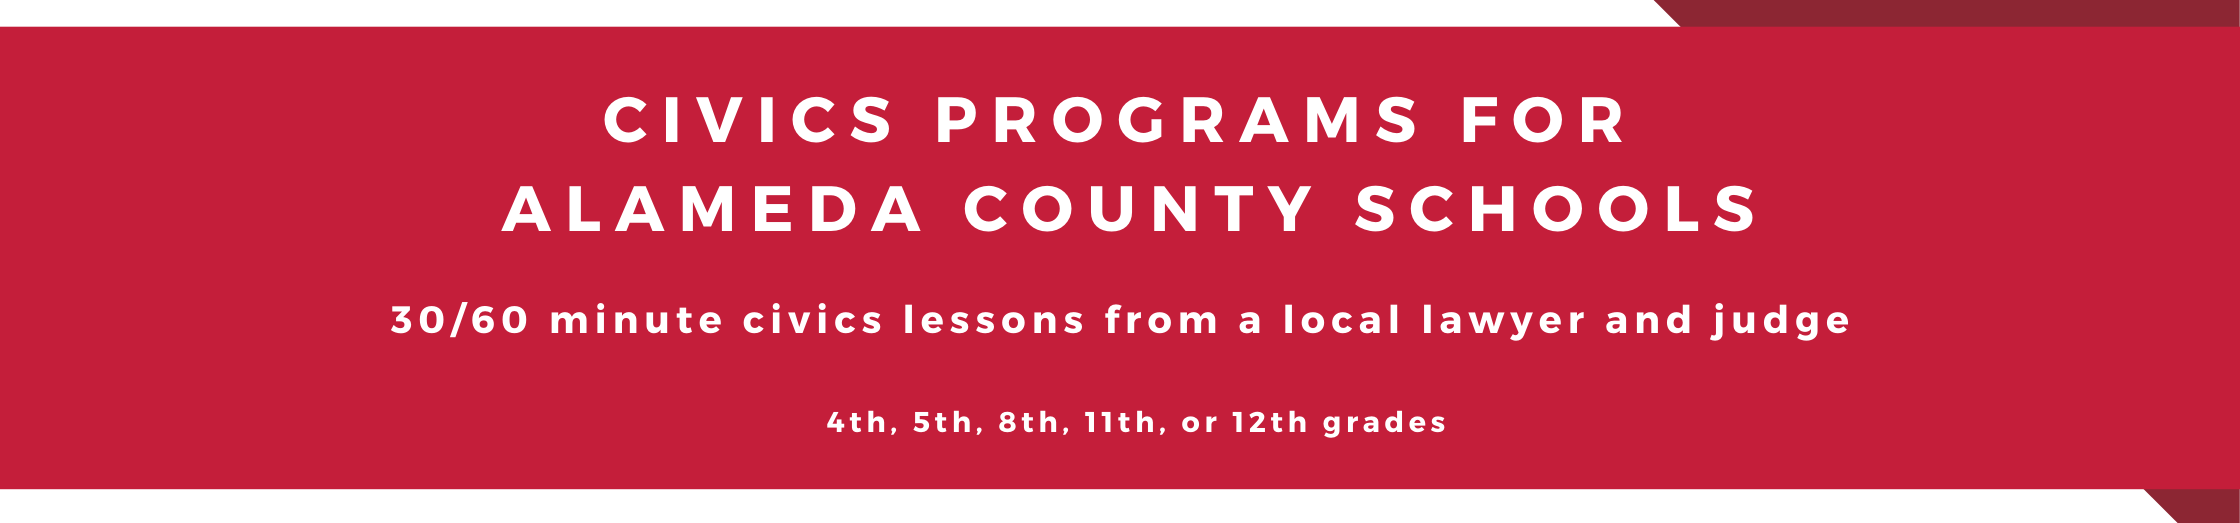 Civics Program for Alameda County Schools